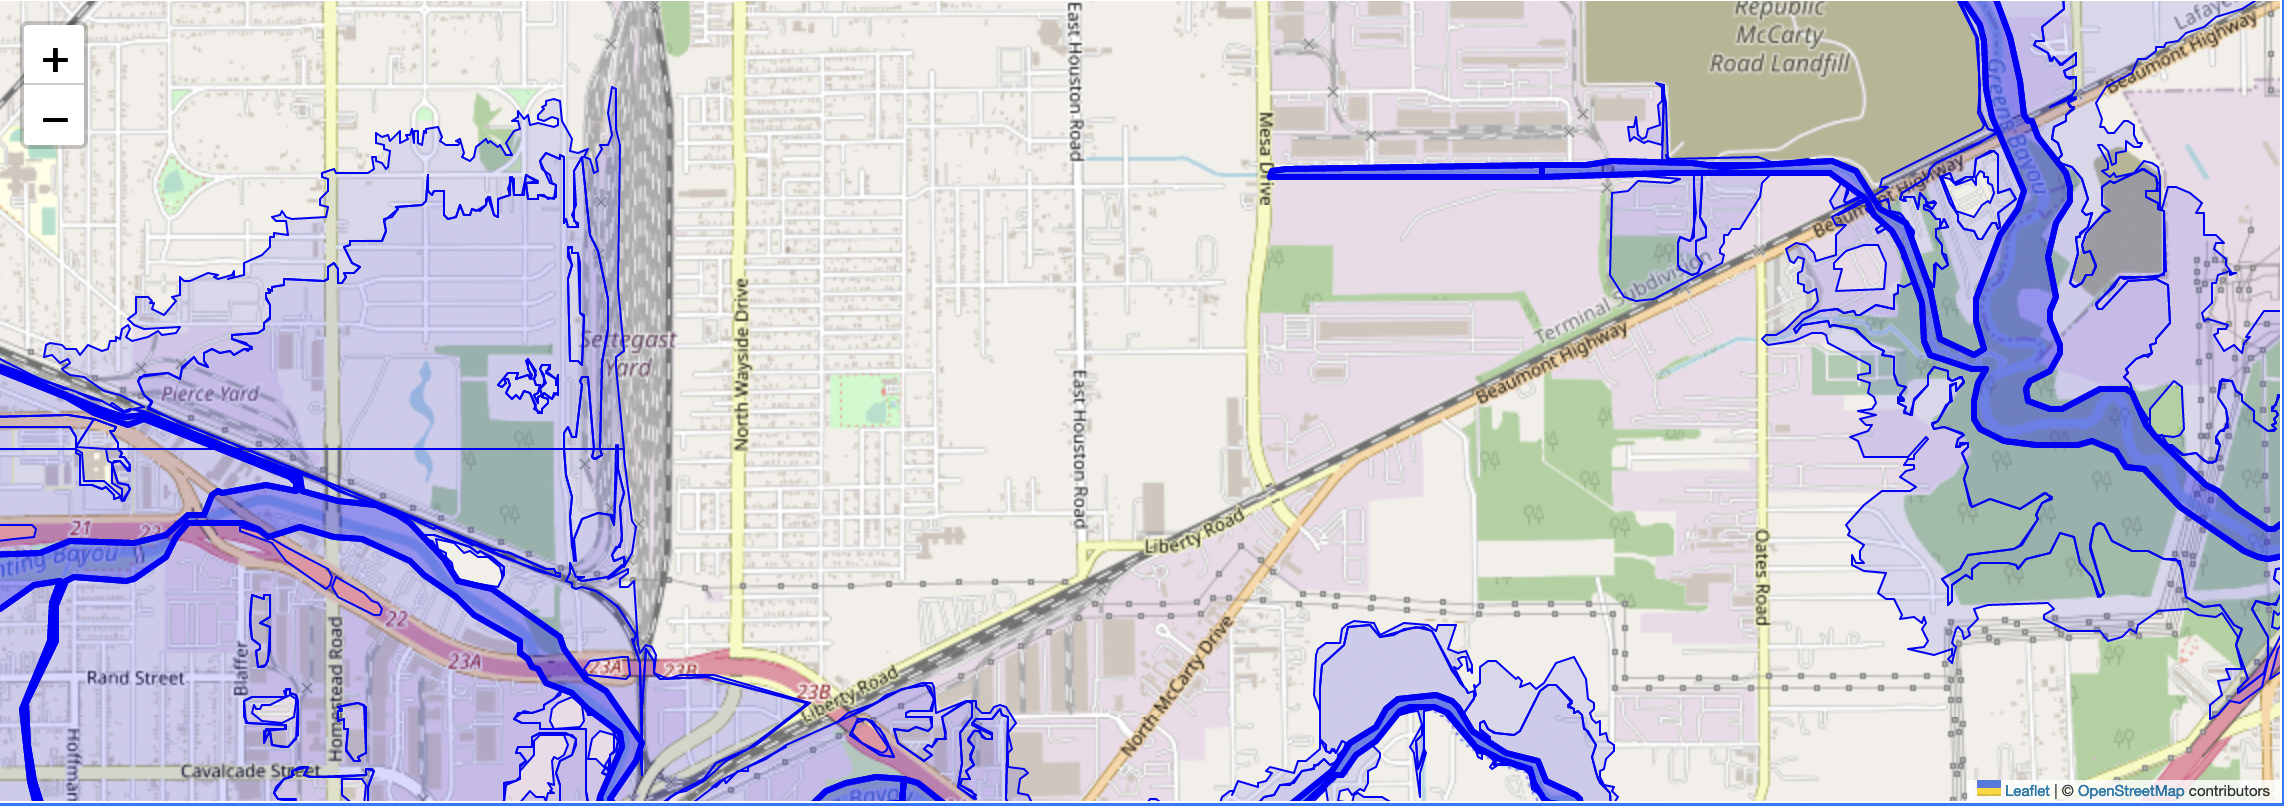 "Example map of Houston area floodplains. Floodplain is highlighted overlay in shades of blue."